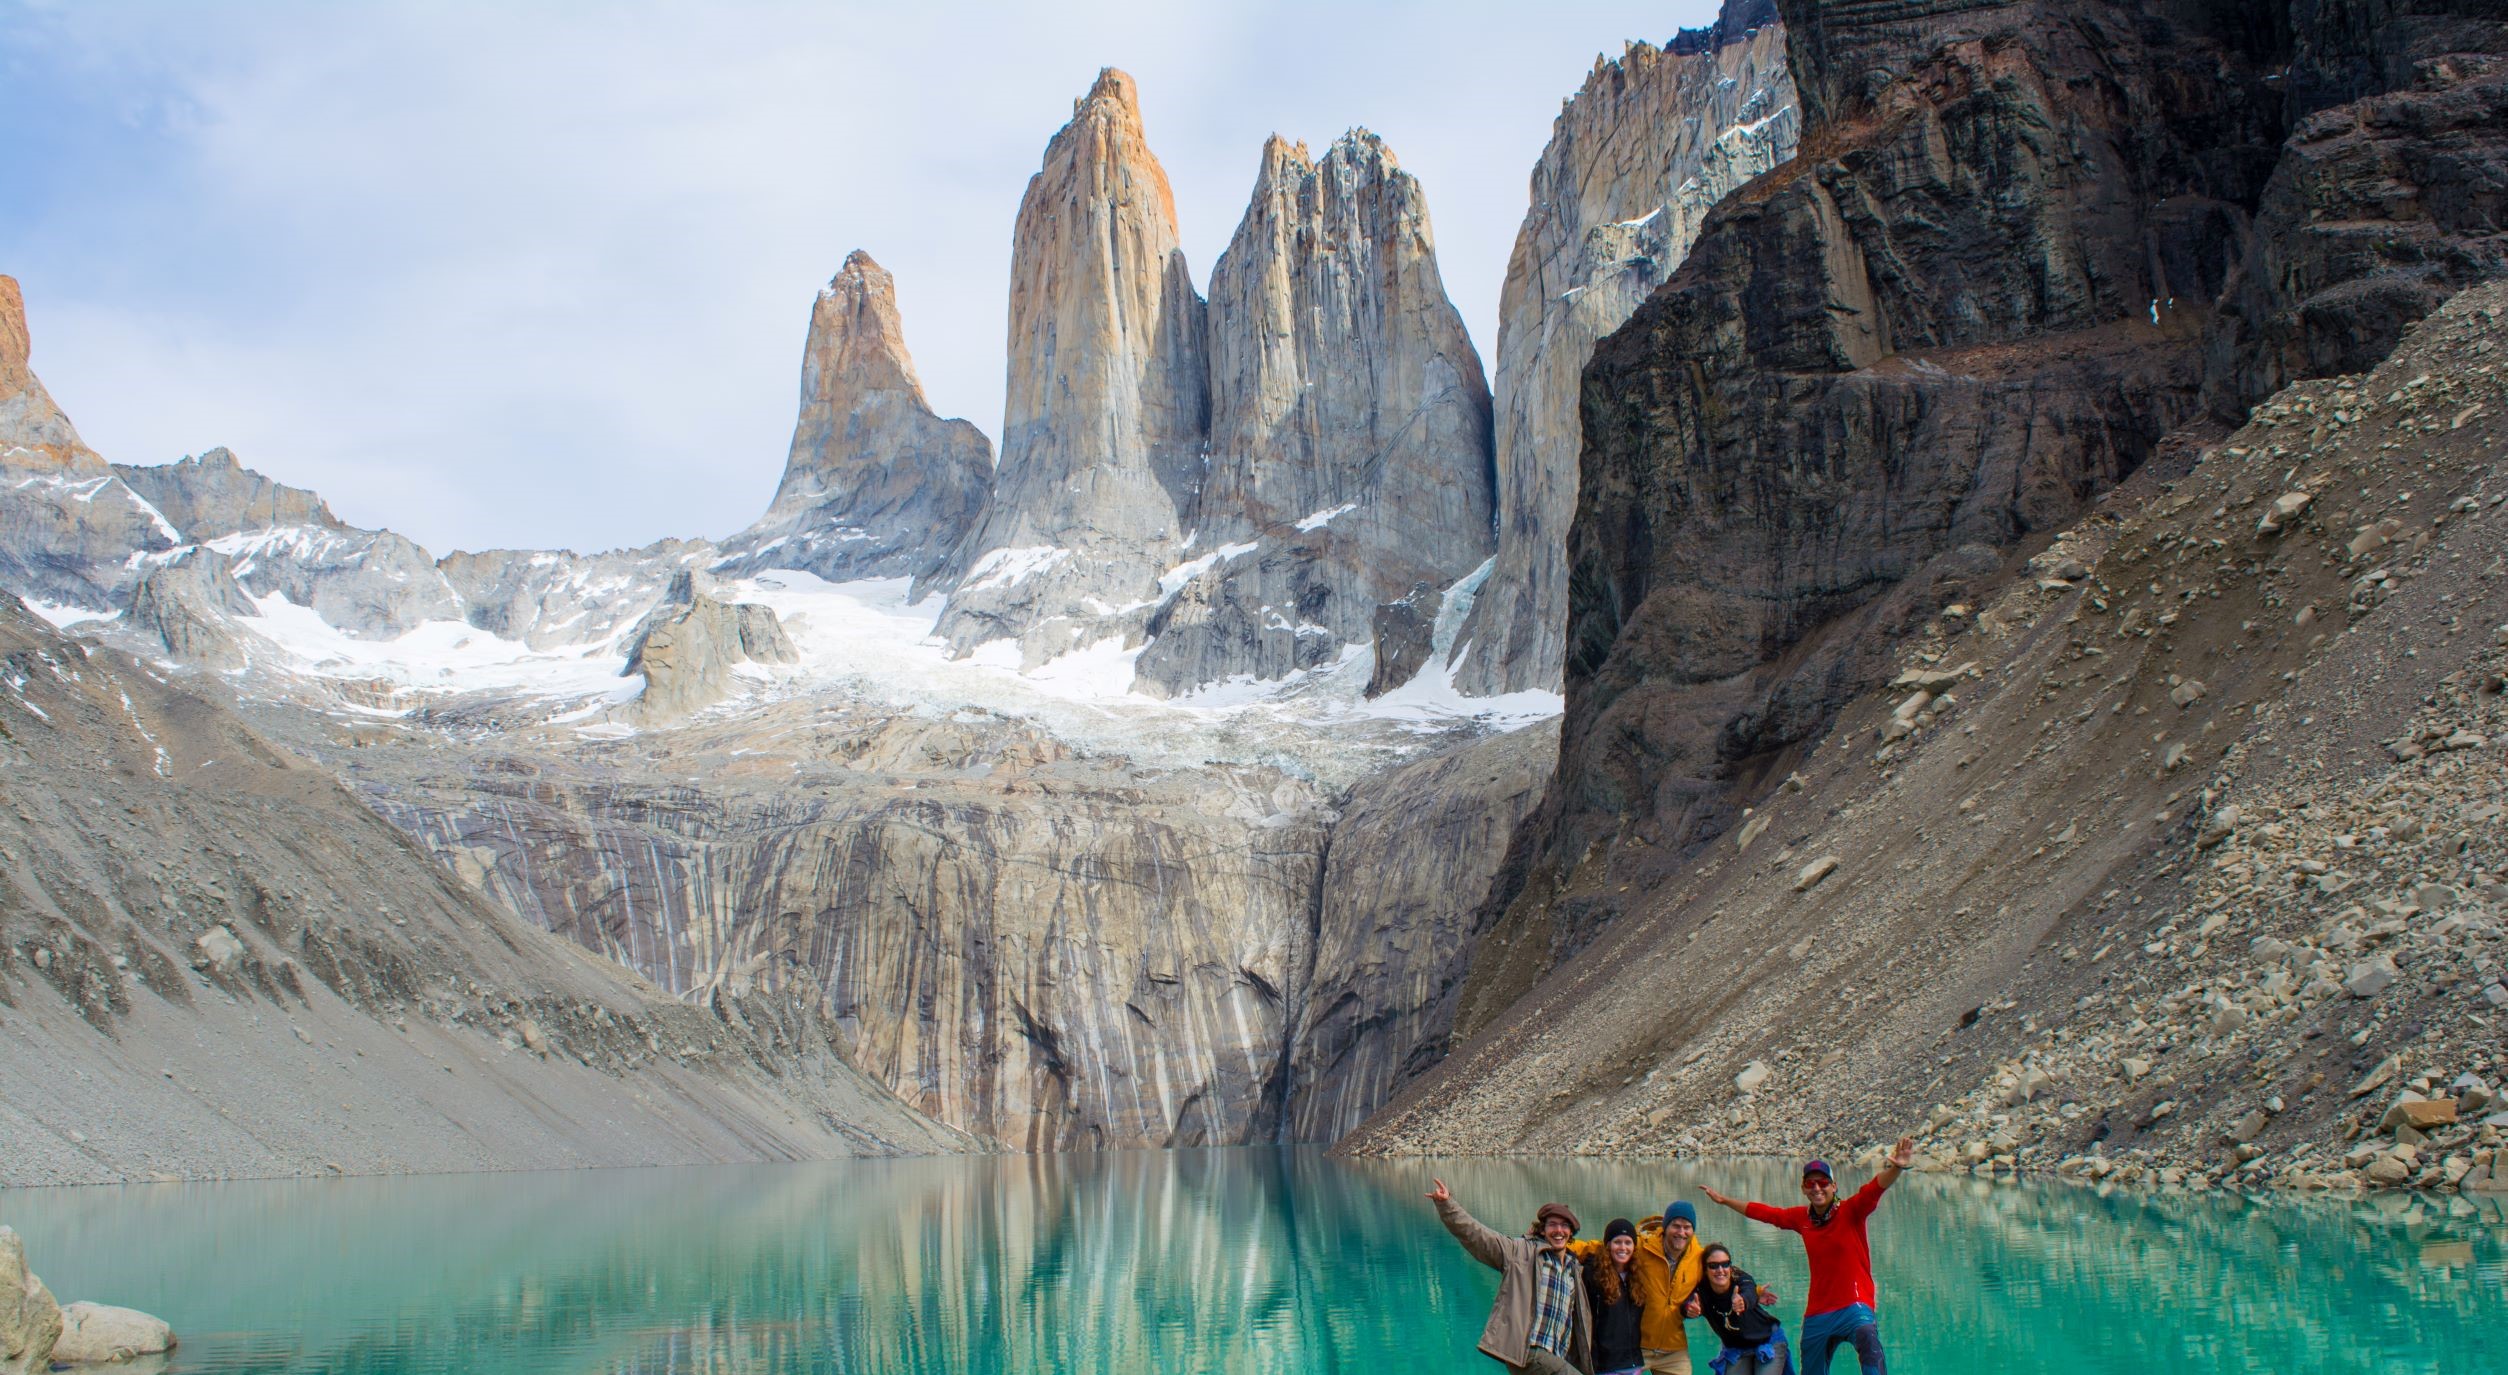 TORRES DEL PAINE NATIONAL PARK 走進智利畫境 享受驚嘆美景